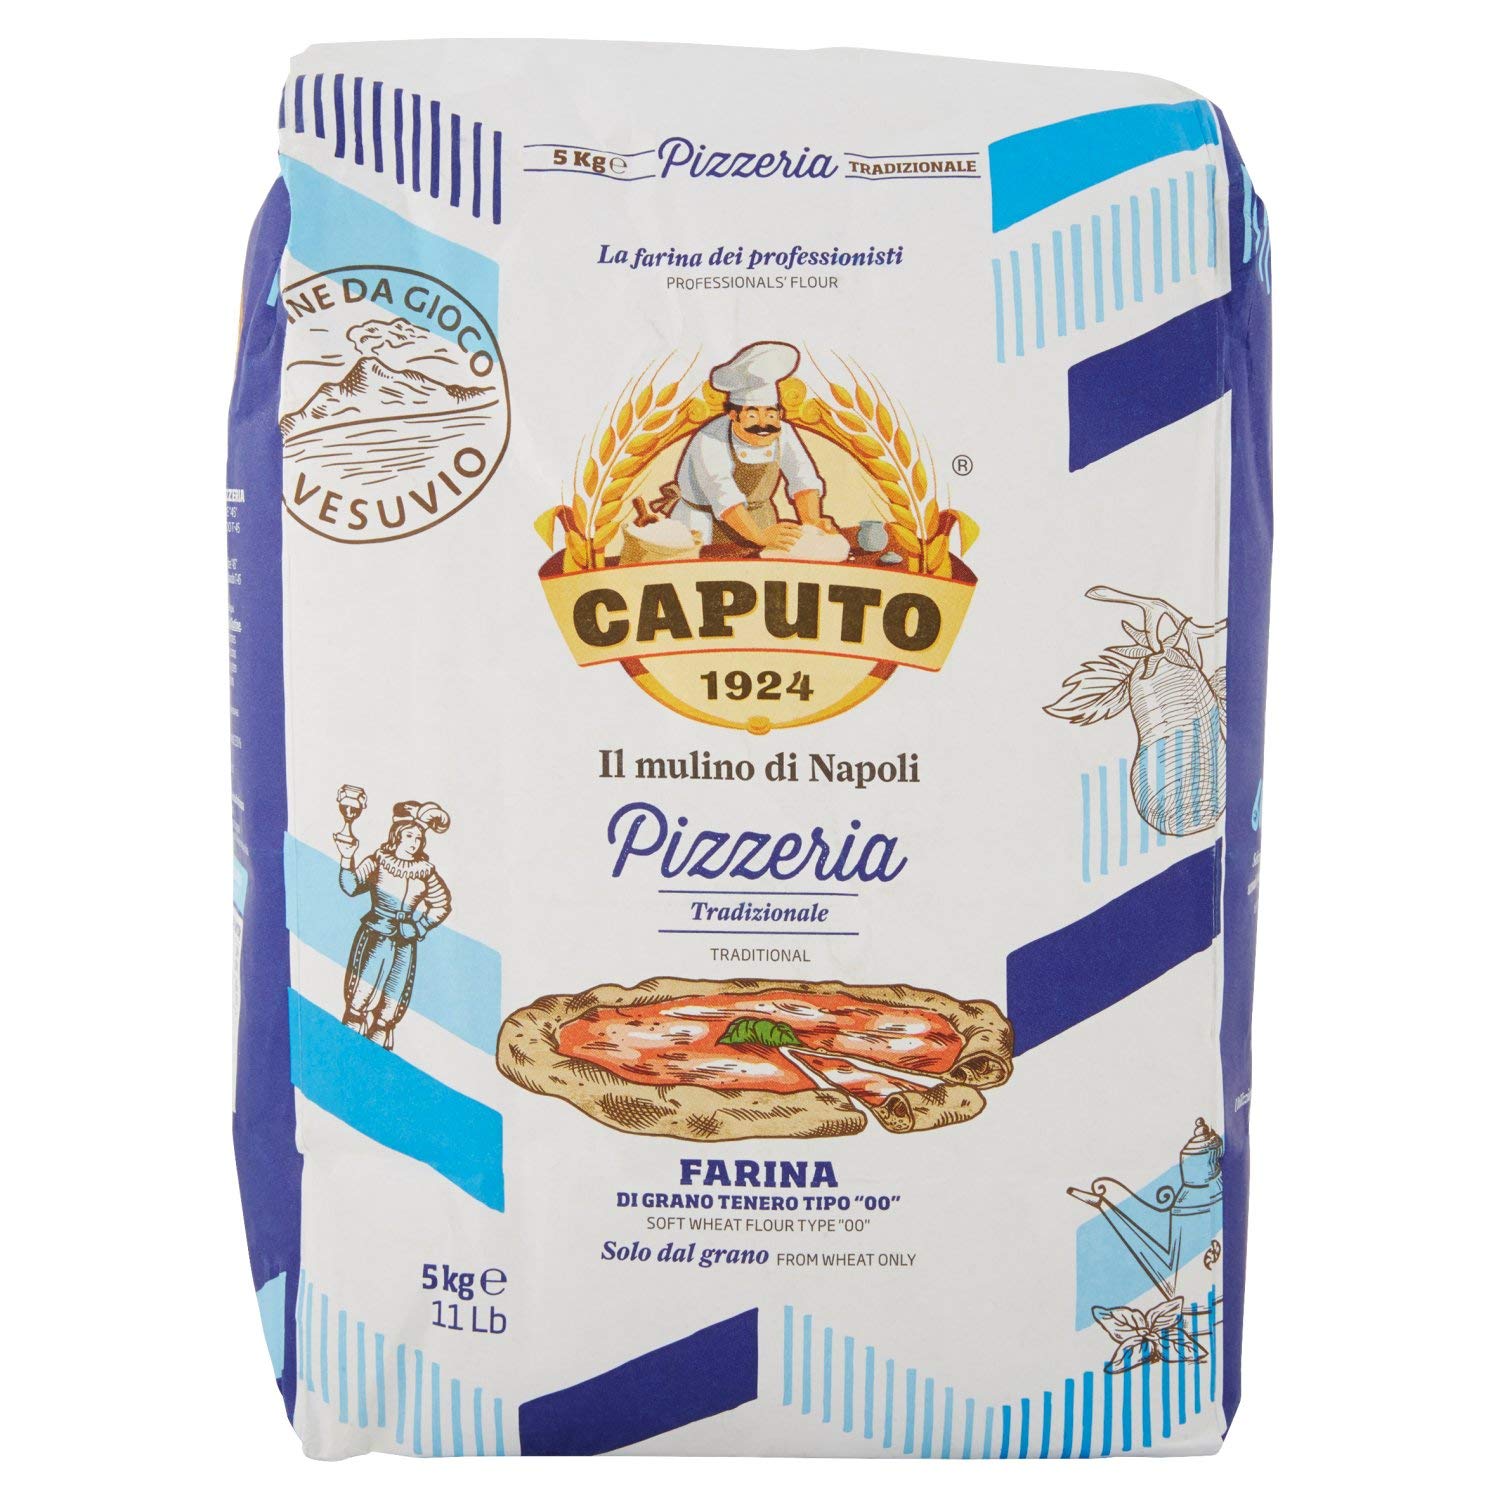 Caputo Pizzaria, Pizza place